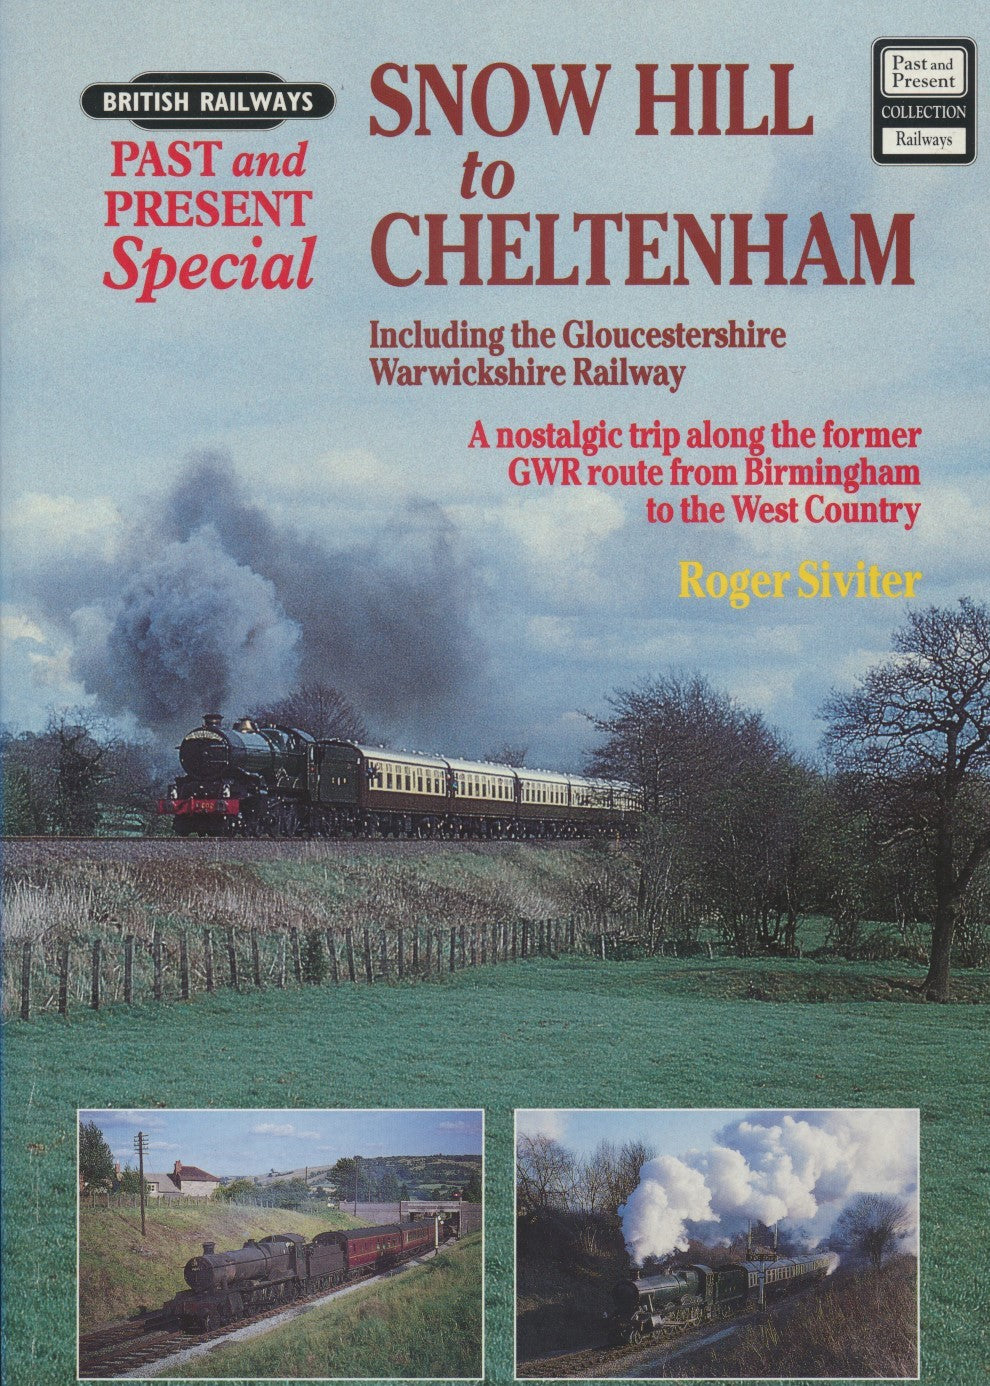 British Railways Past & Present Special - Snow Hill to Cheltenham